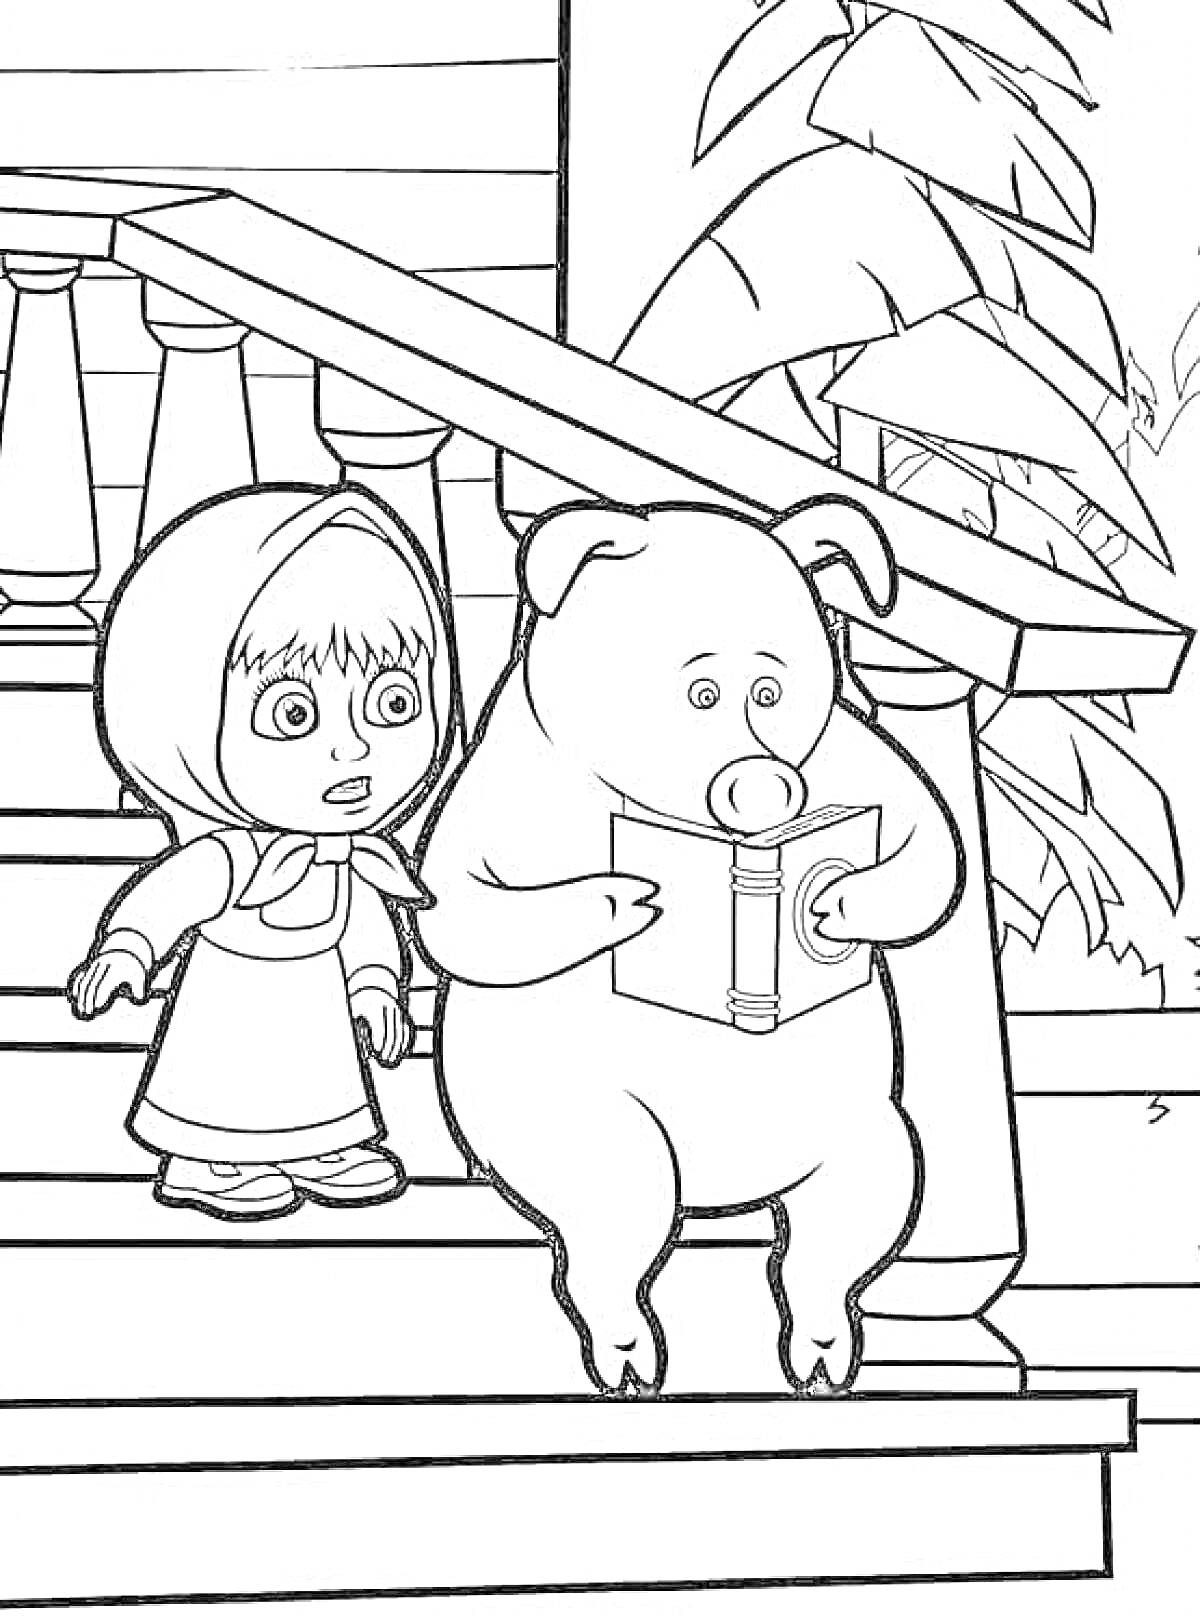 Раскраска Маша и Медведь на лестнице, Медведь читает книгу